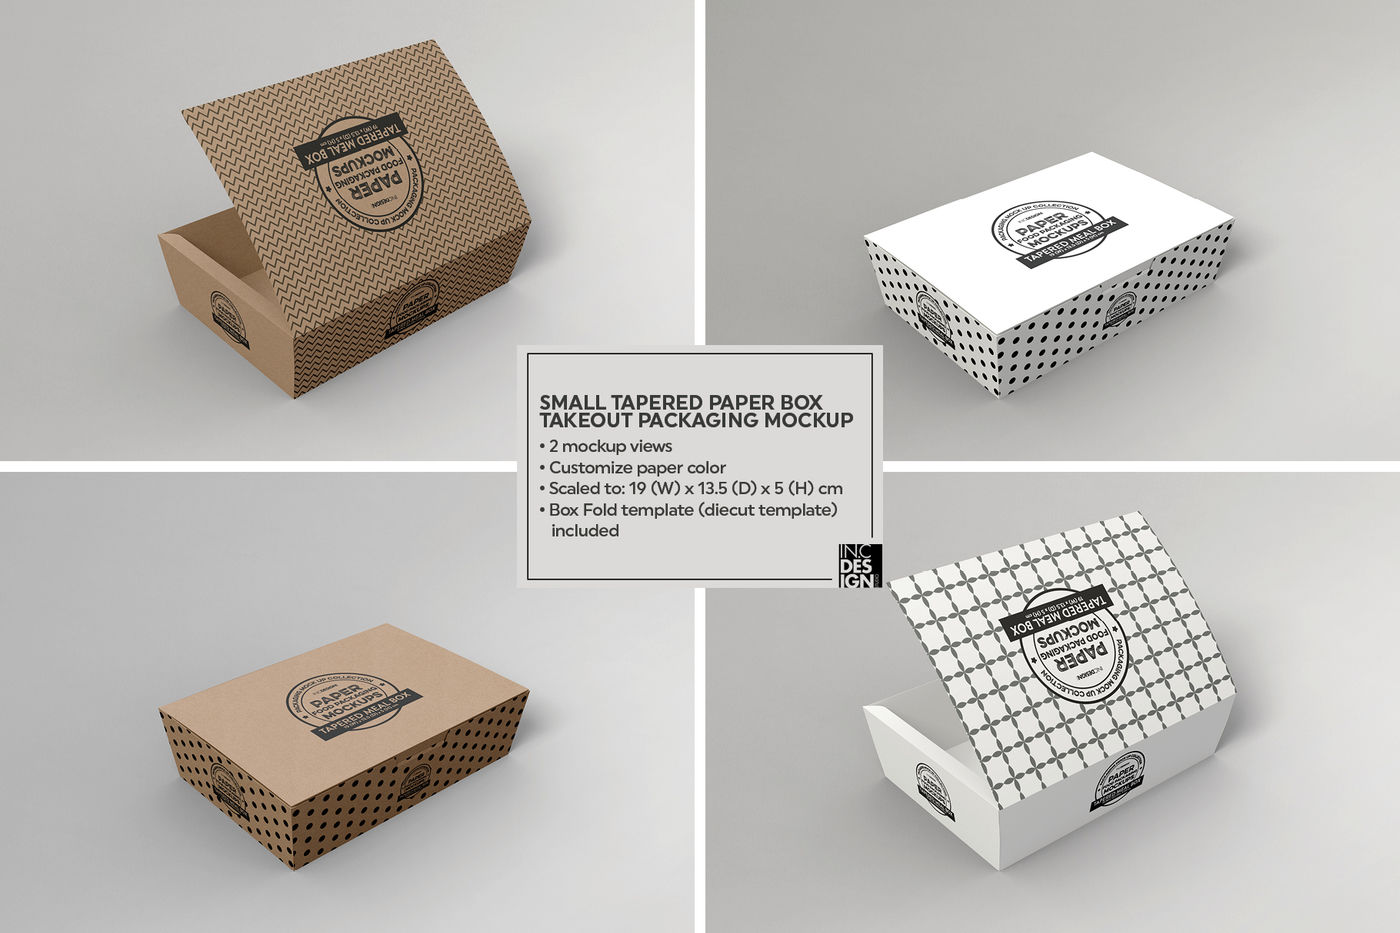 Download Vol 13 Paper Food Box Packaging Mockups By Inc Design Studio Thehungryjpeg Com